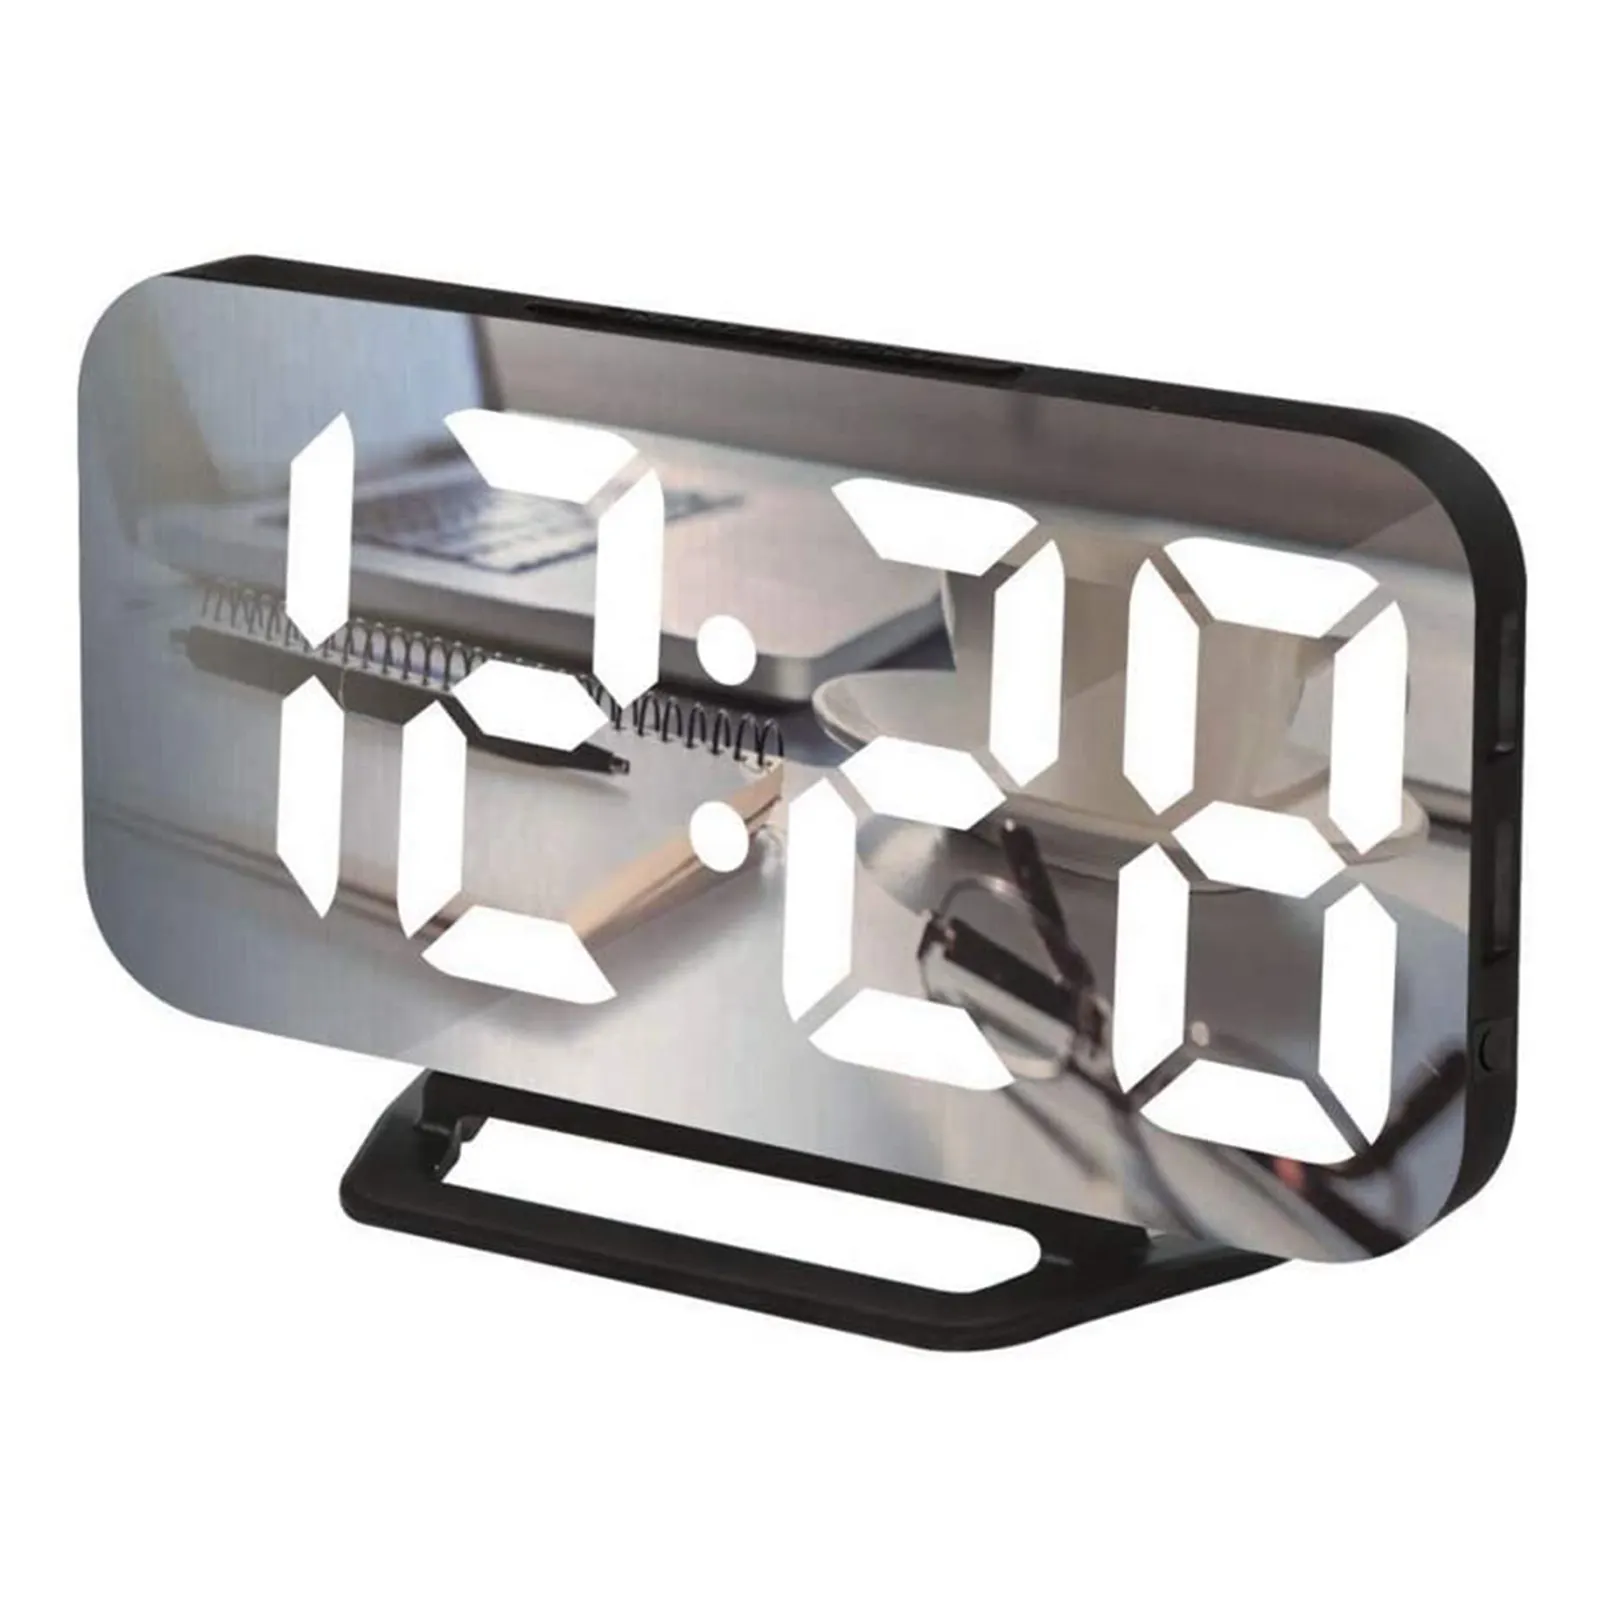 KH-CL027 Digital Large Mirrored LED Snooze Dim Night Light 2 USB Charger Ports Desk Alarm Clocks for Bedroom Decor